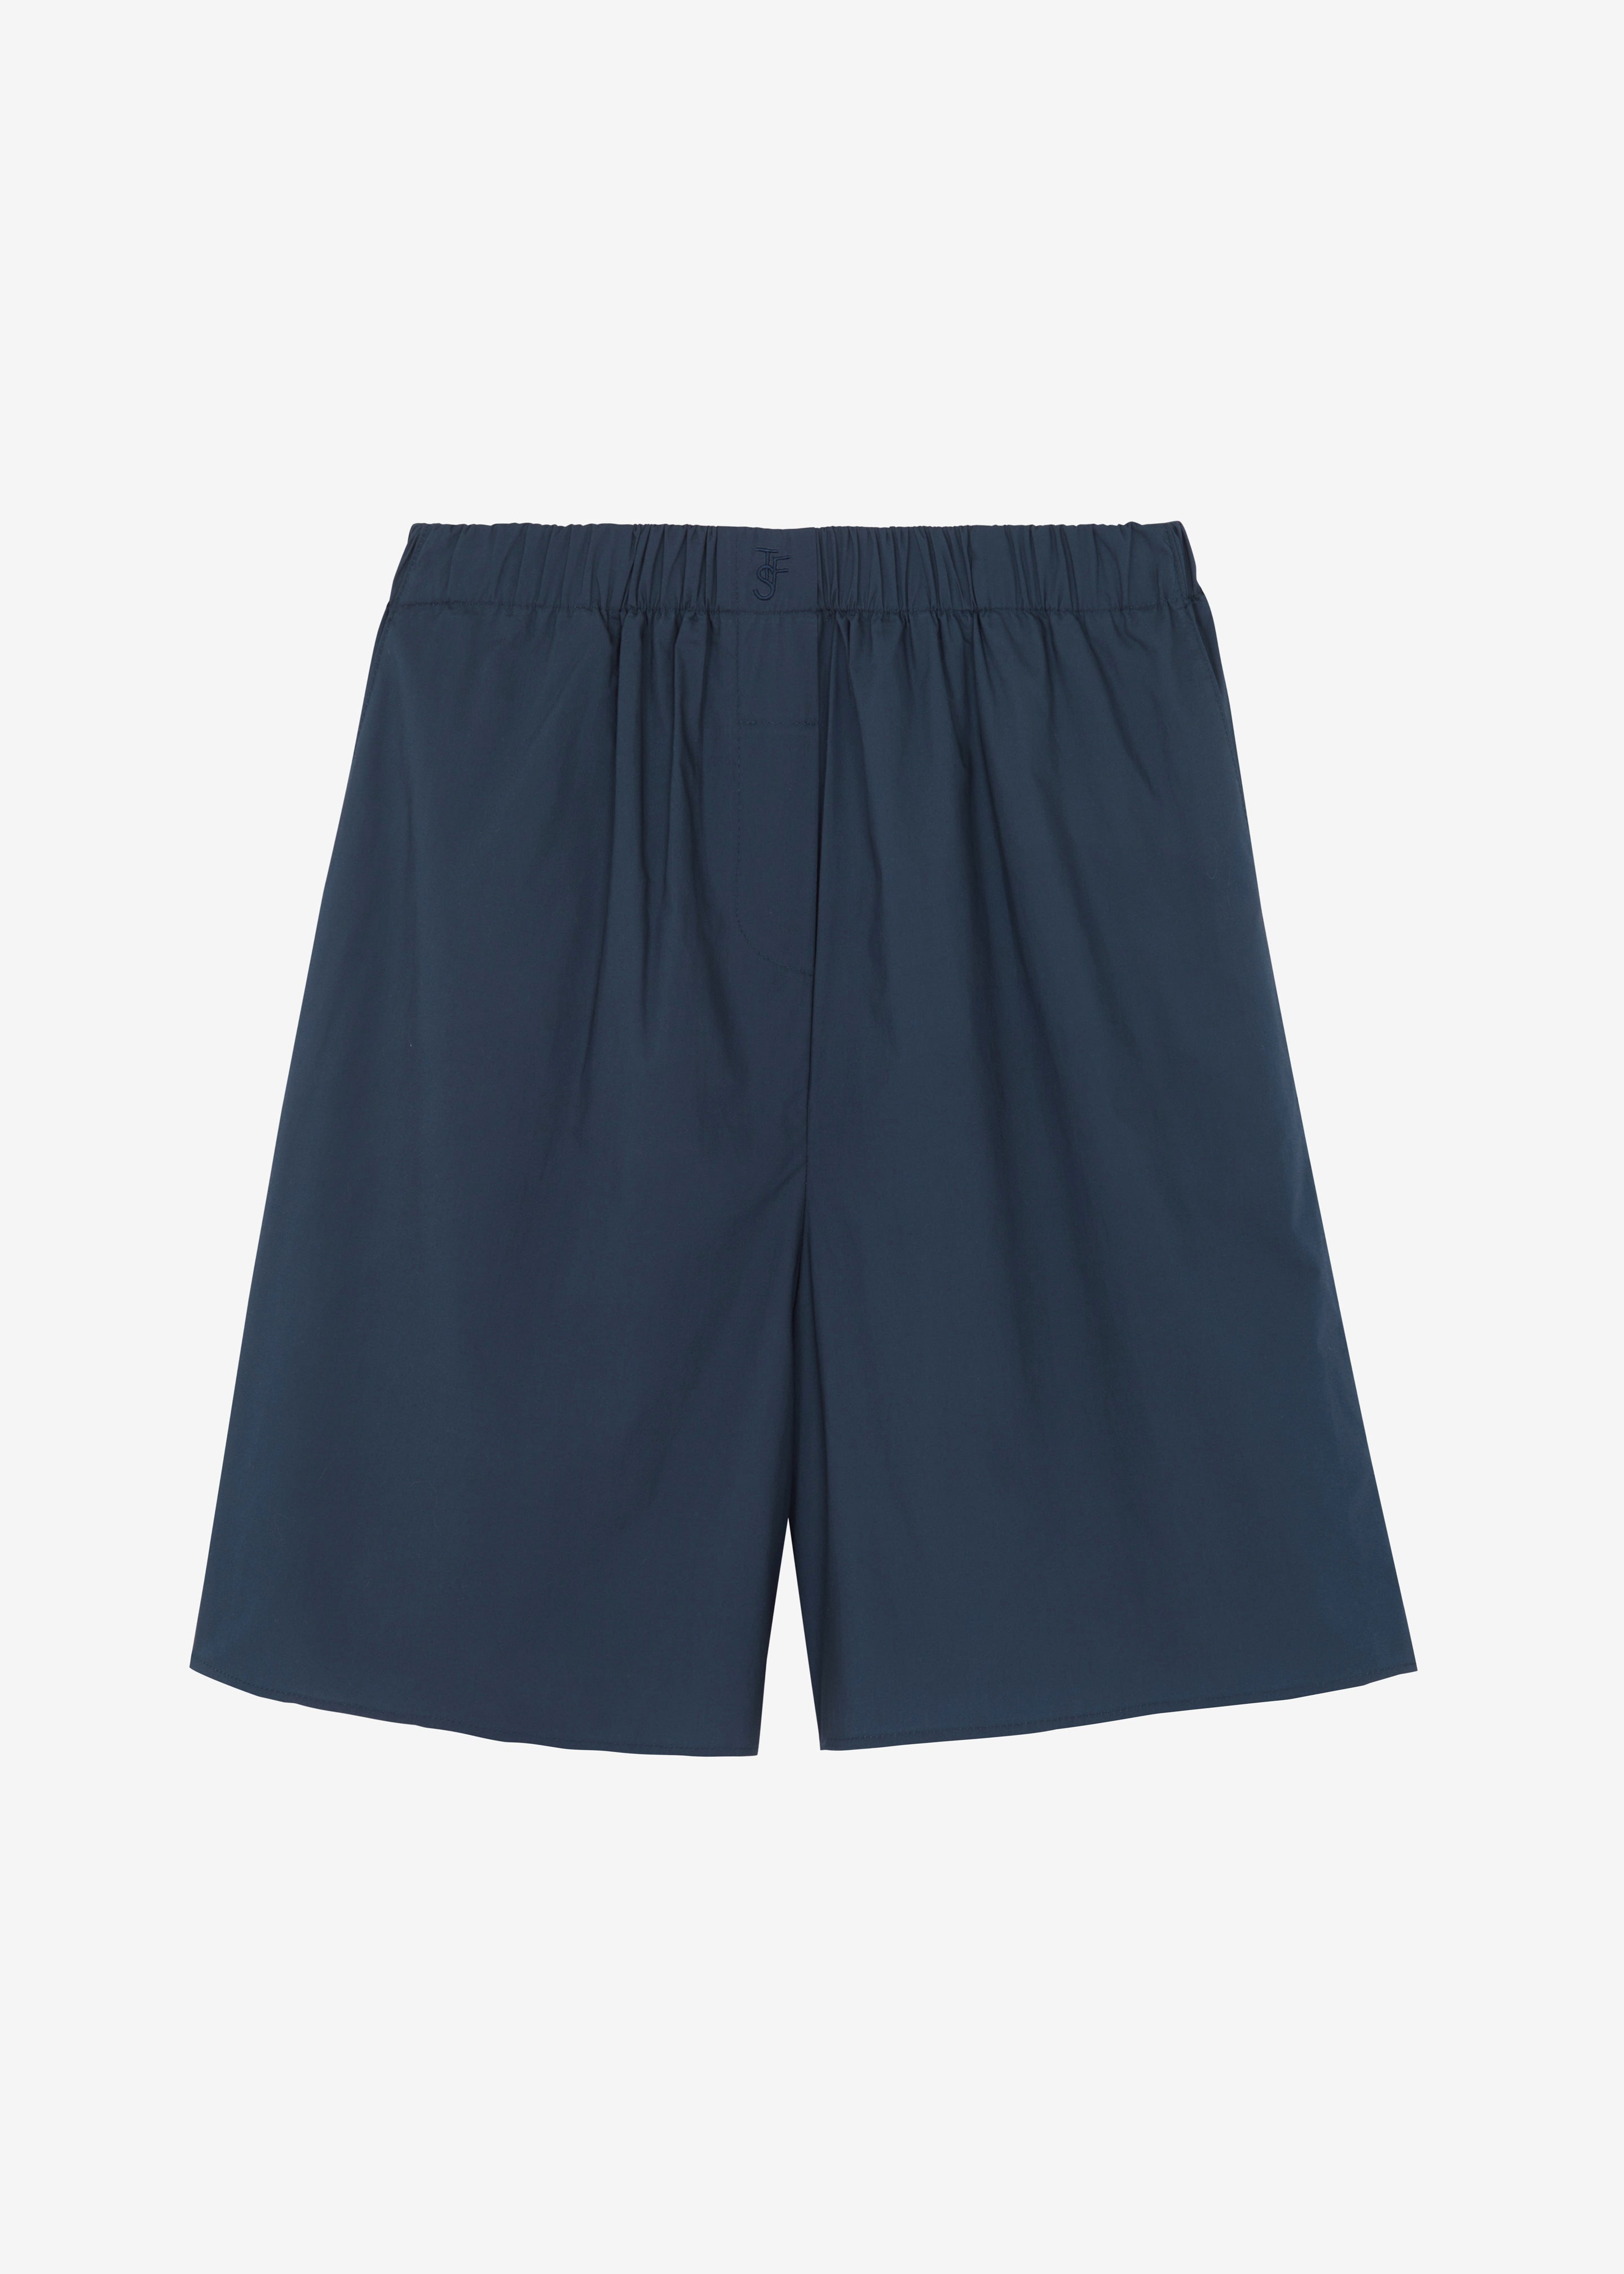 Levi Bermuda Shorts - Midnight Blue - 9